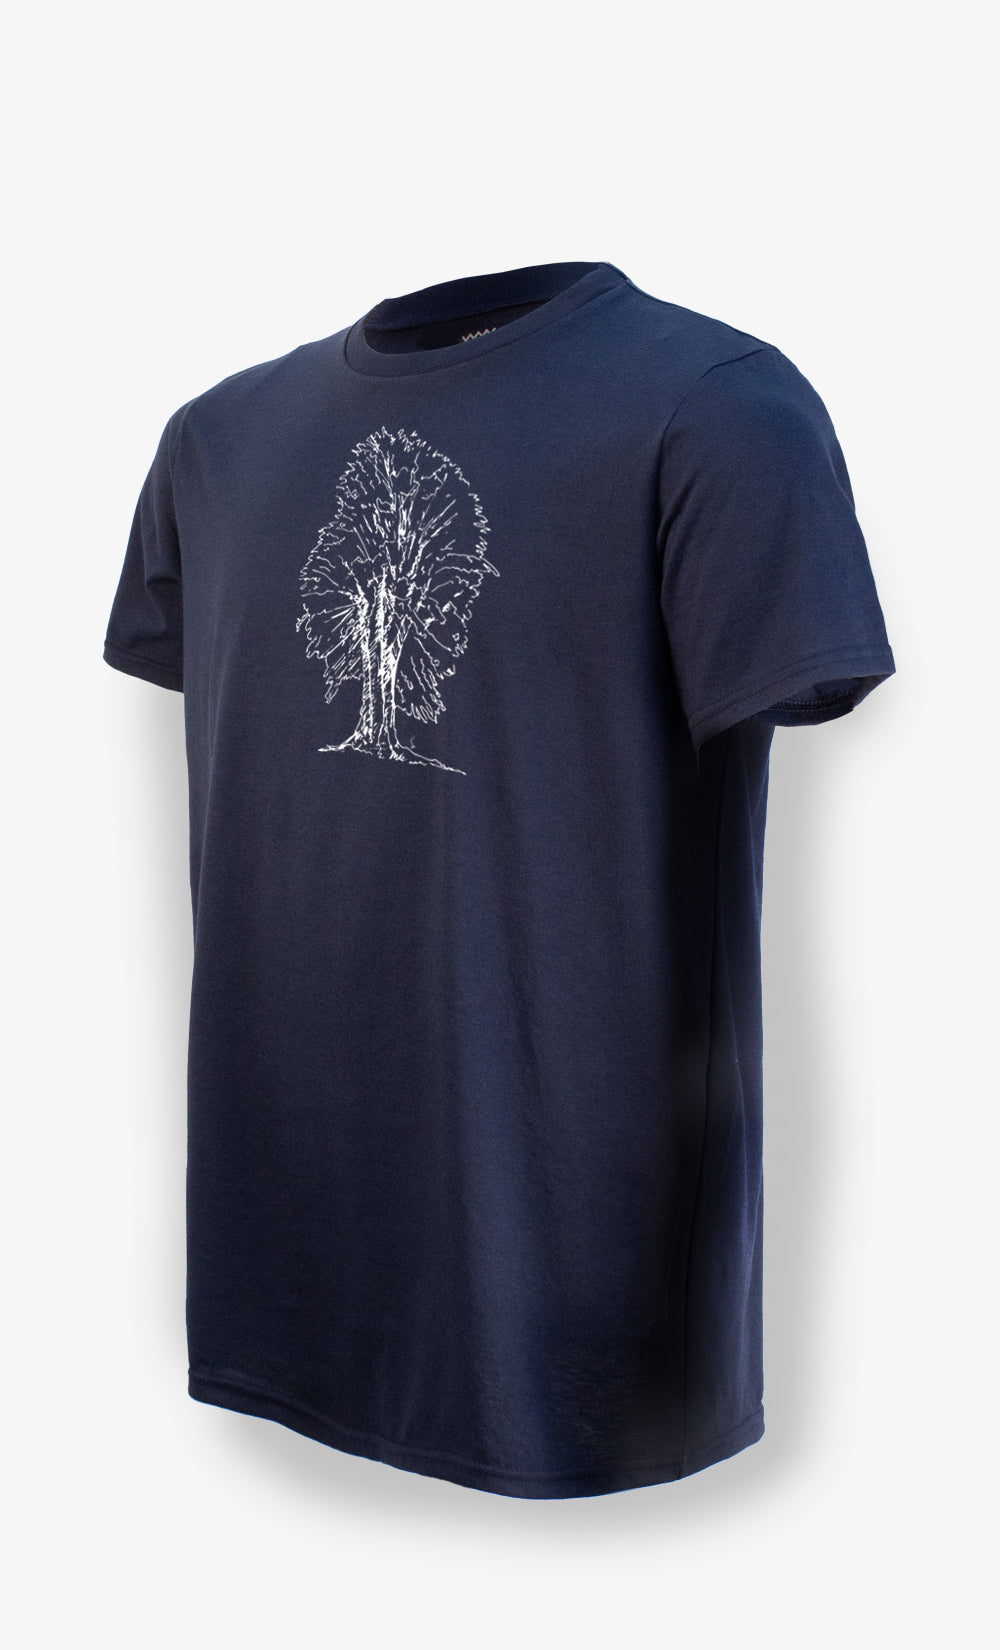 Men's Navy T-Shirt - Tree